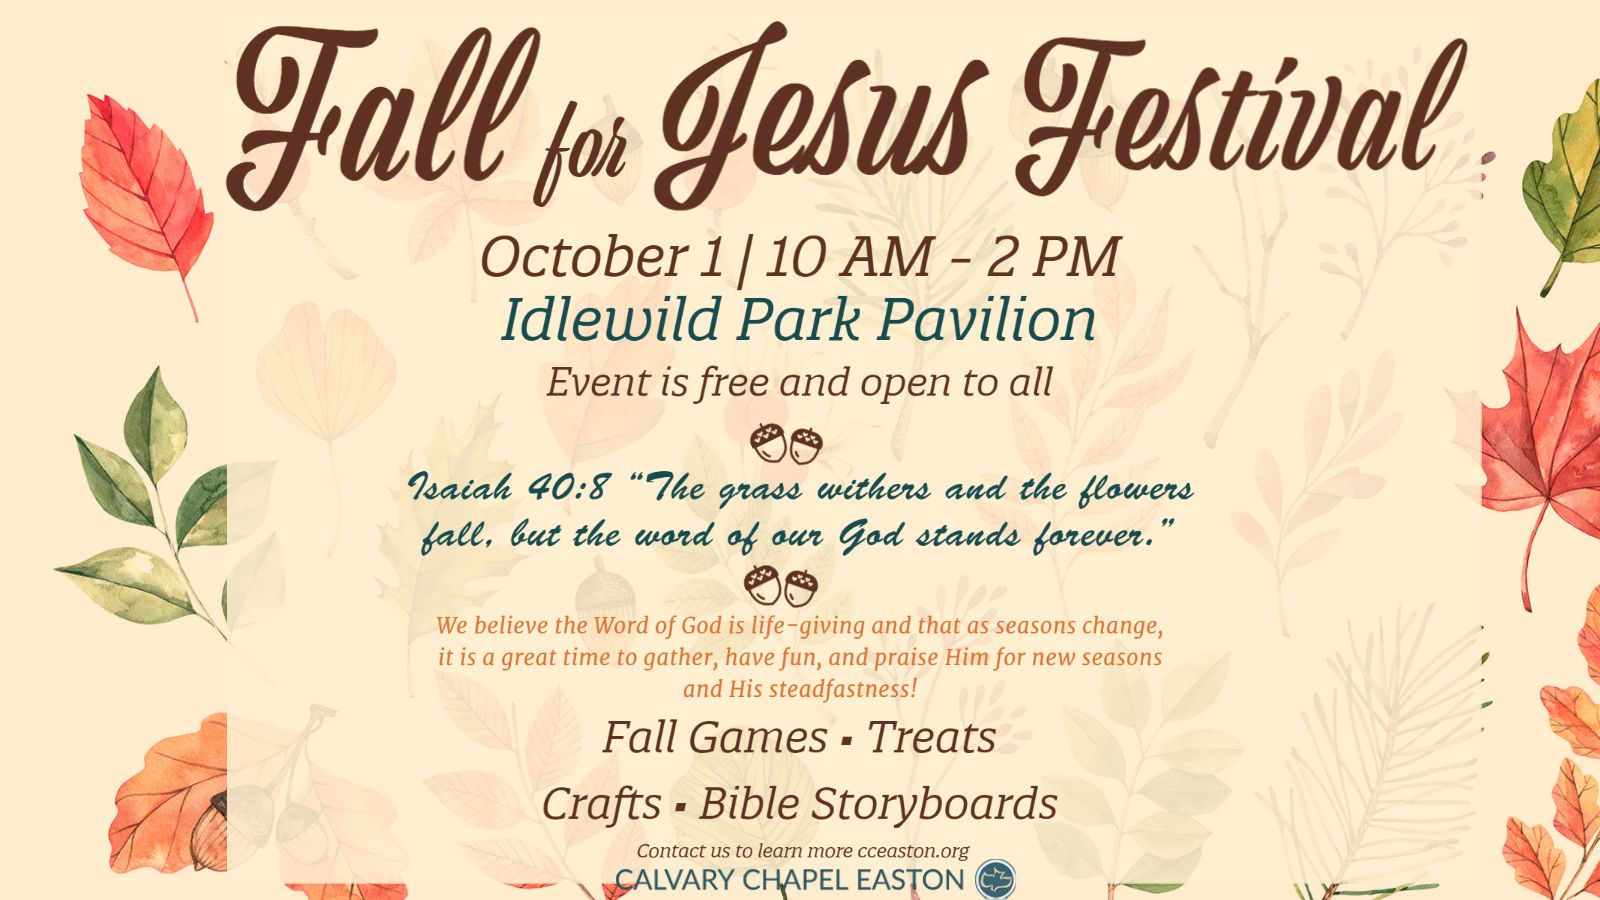 Fall for Jesus Festival, Easton, Maryland, United States